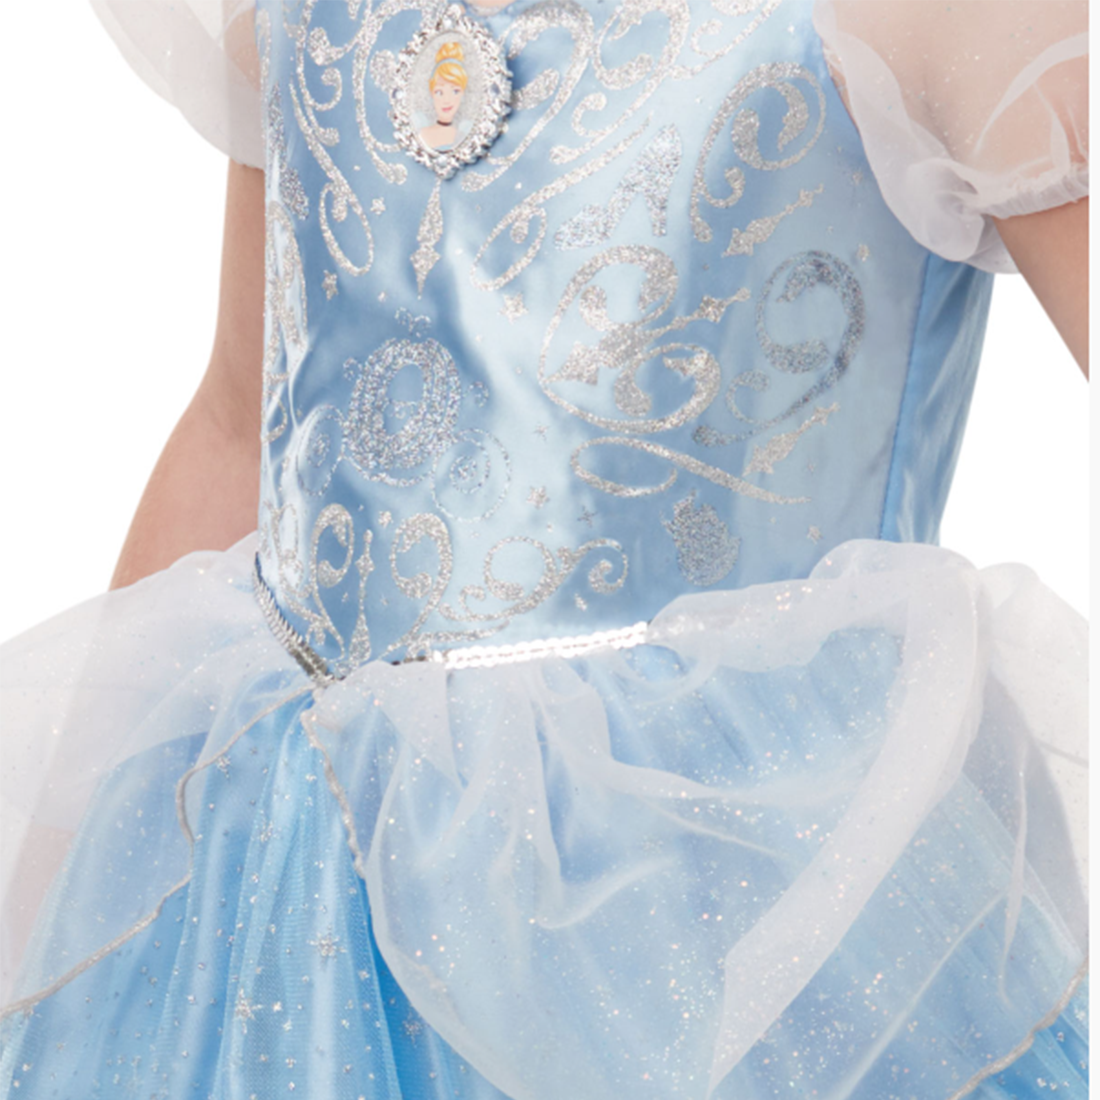 Child Disney Princess Cinderella Glitter & Sparkle Costume